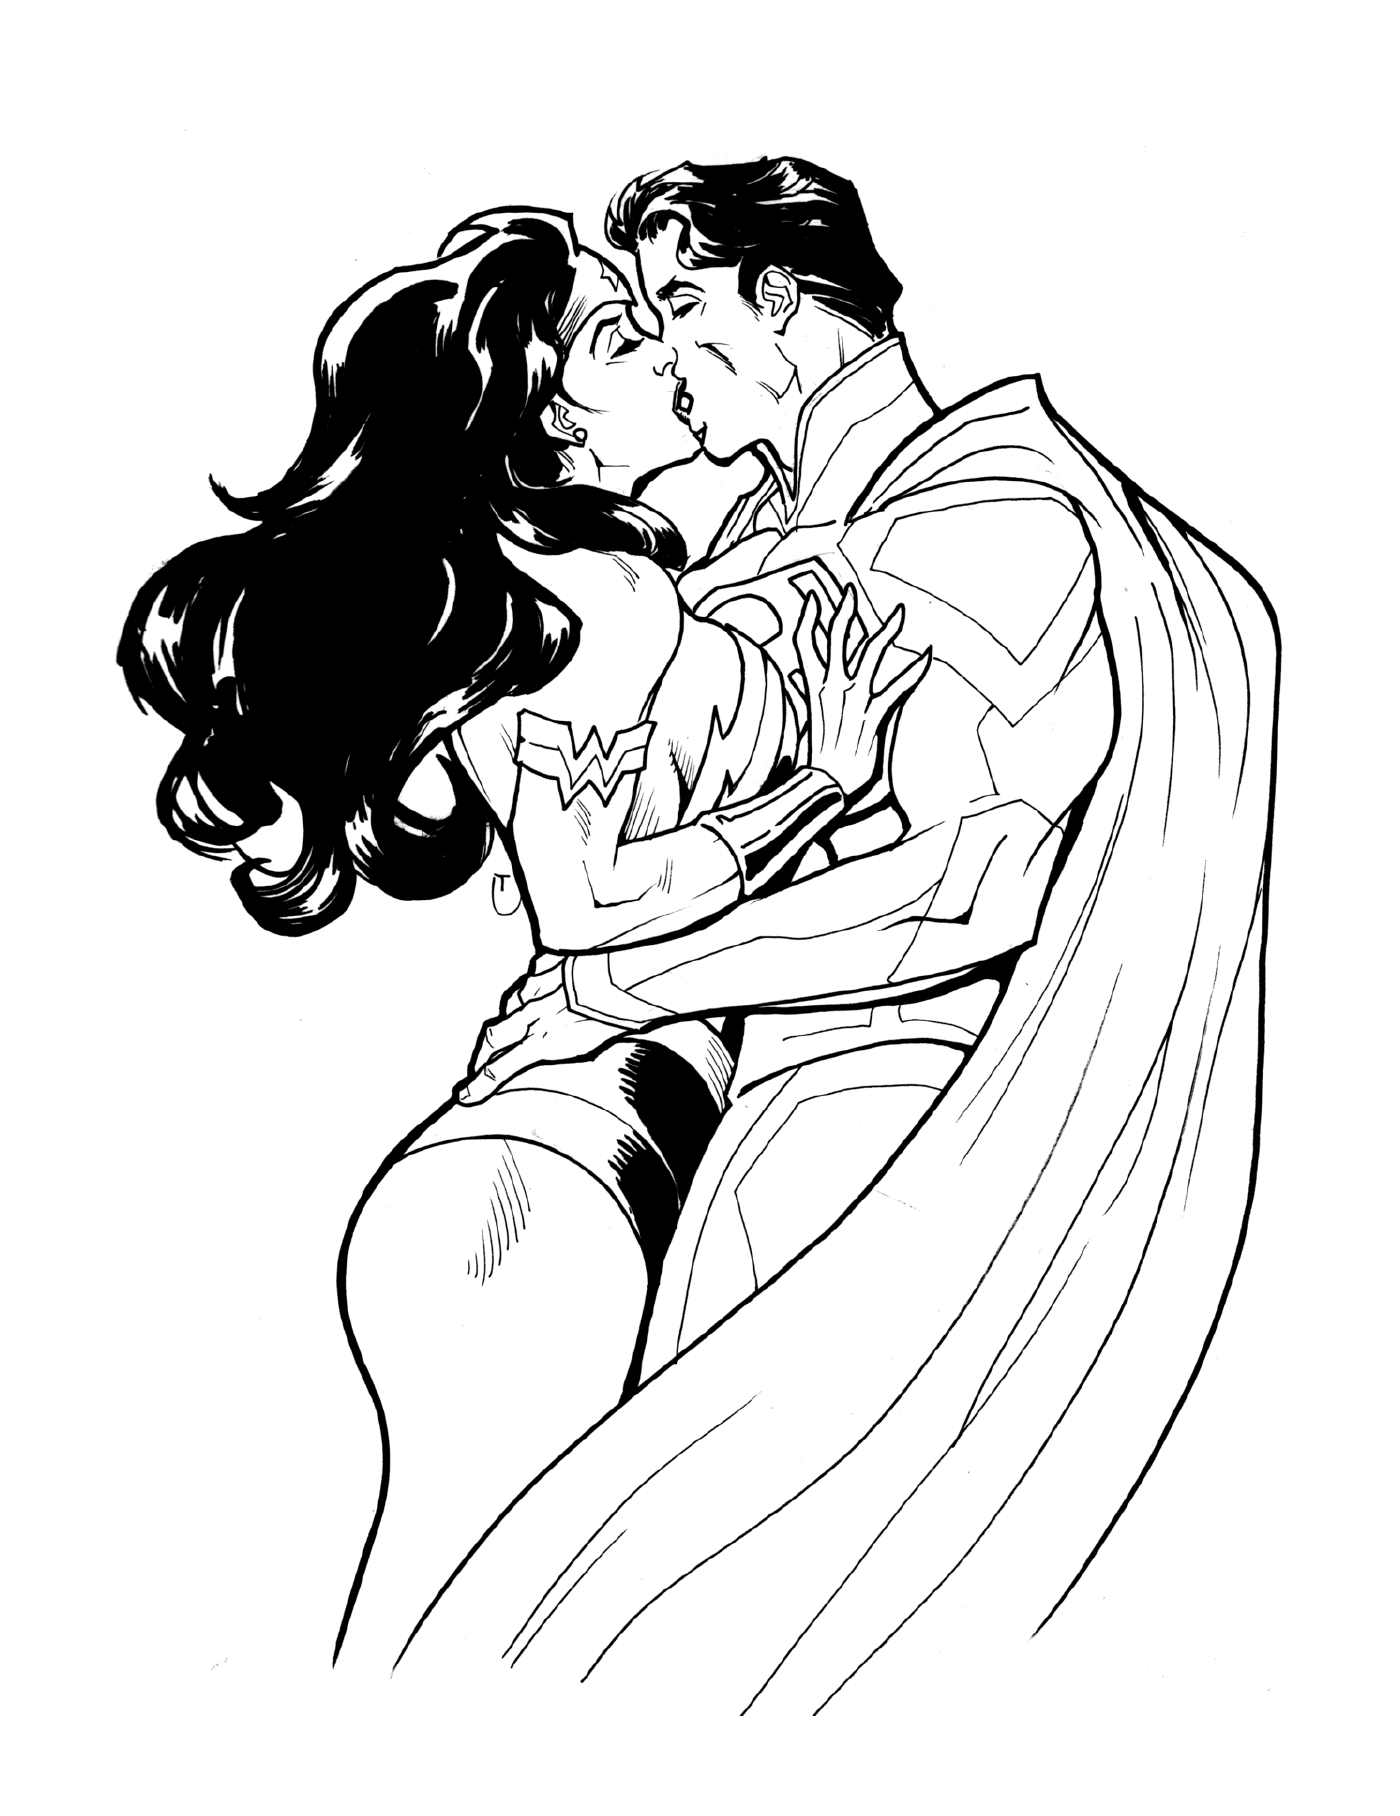   Wonder Woman amoureuse de Superman 